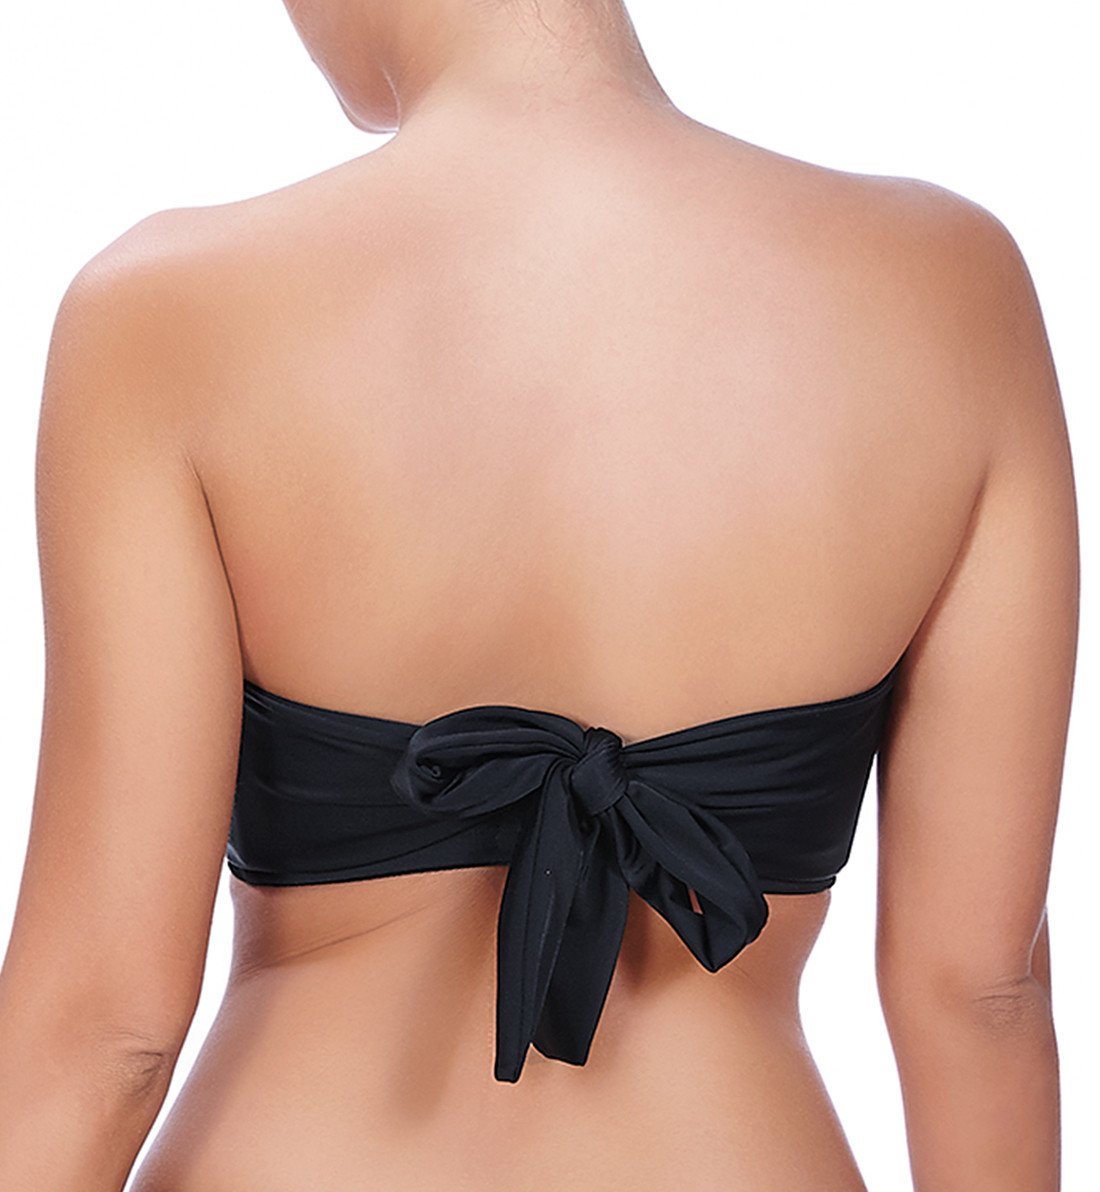 Freya Deco Swim Molded Underwire Multi-way Bandeau Bikini Top (3872),28D,Black - Black,28D